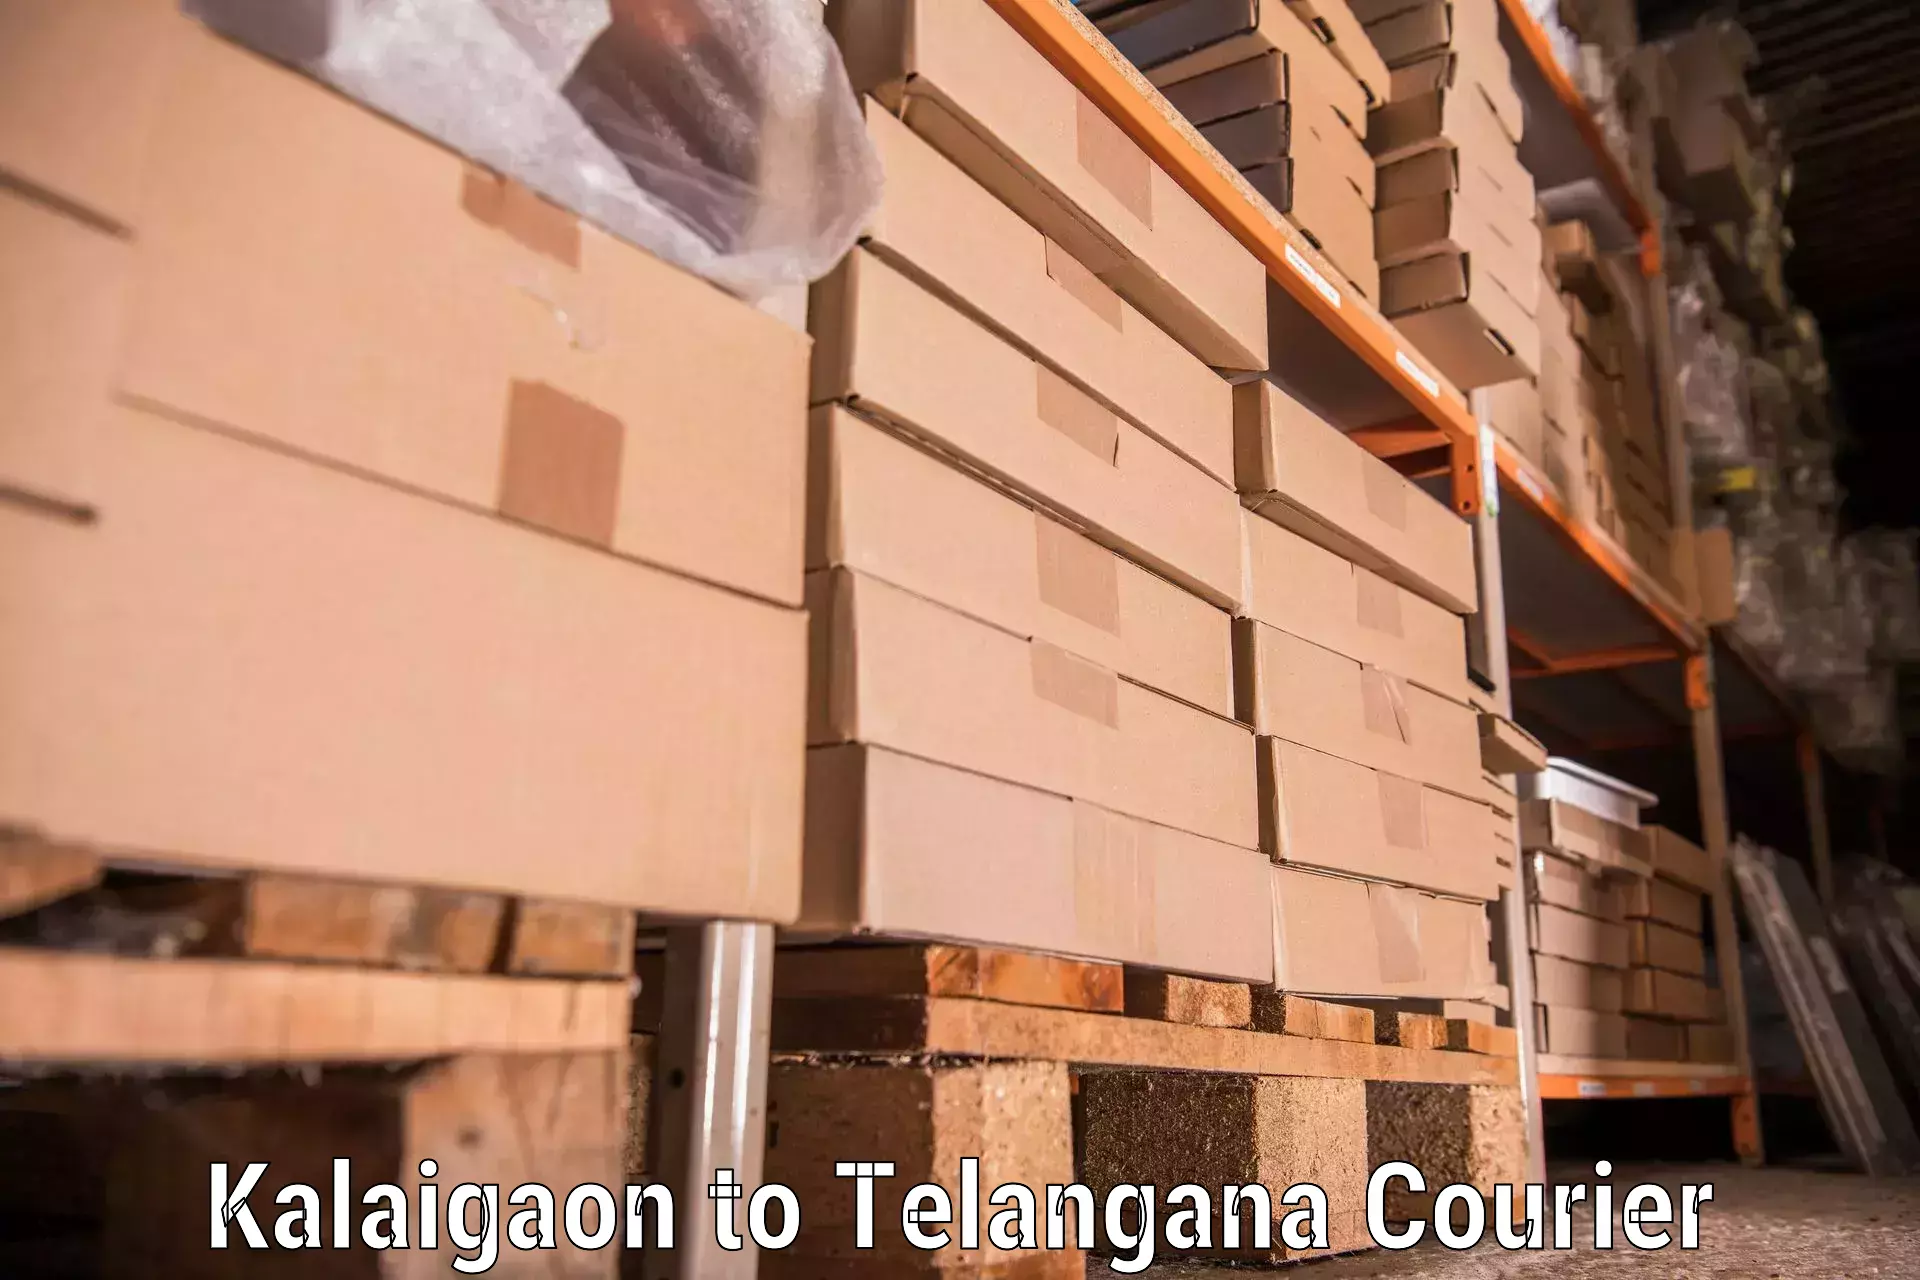 Professional moving assistance in Kalaigaon to Veenavanka